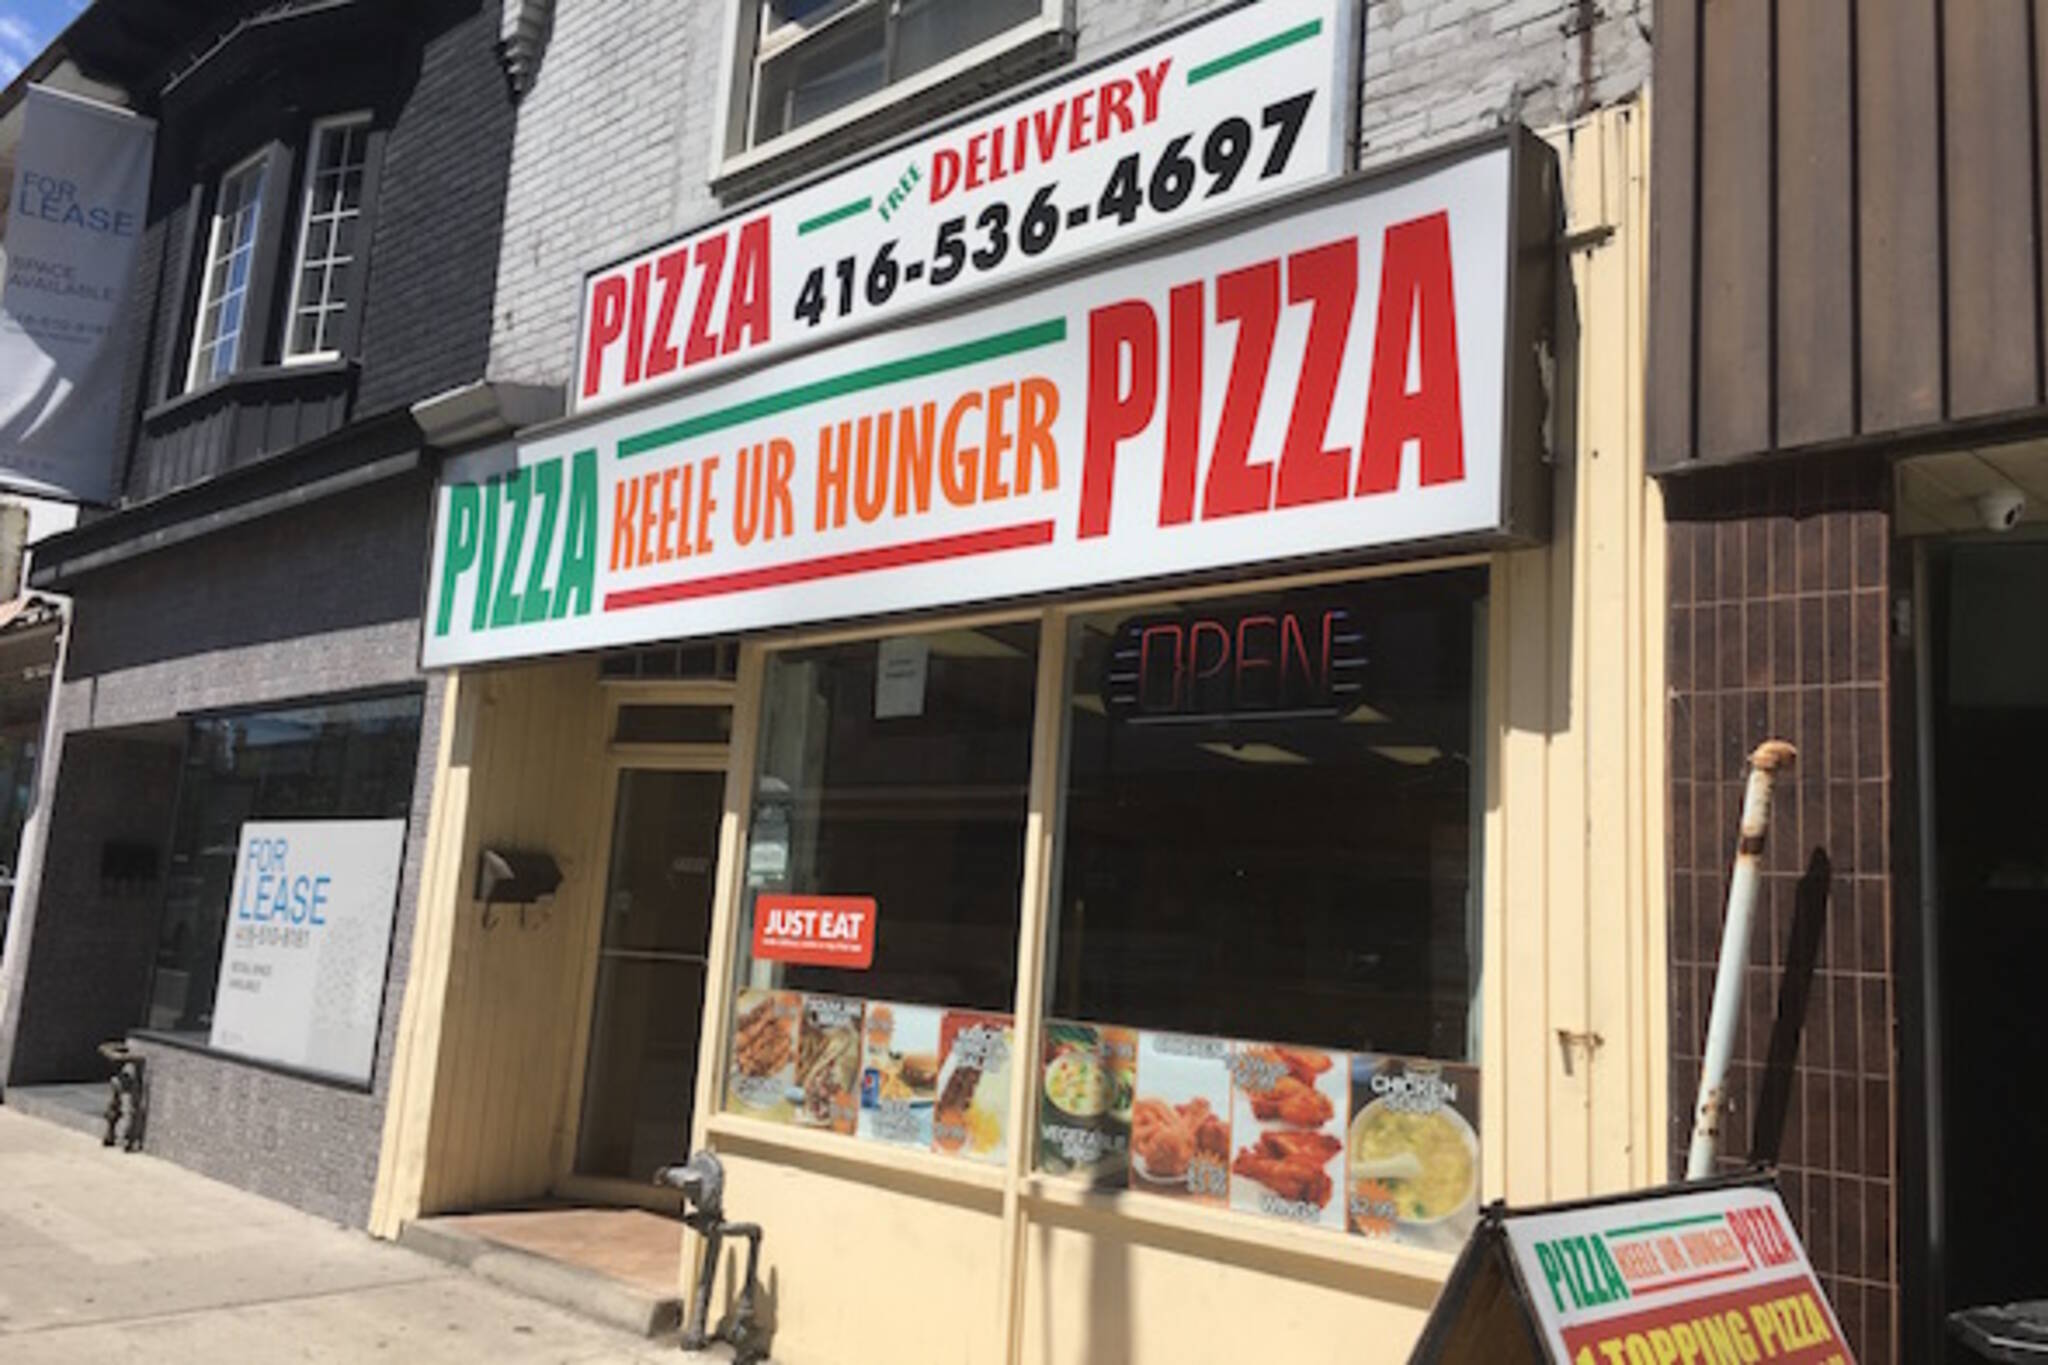 Keele Ur Hunger Toronto